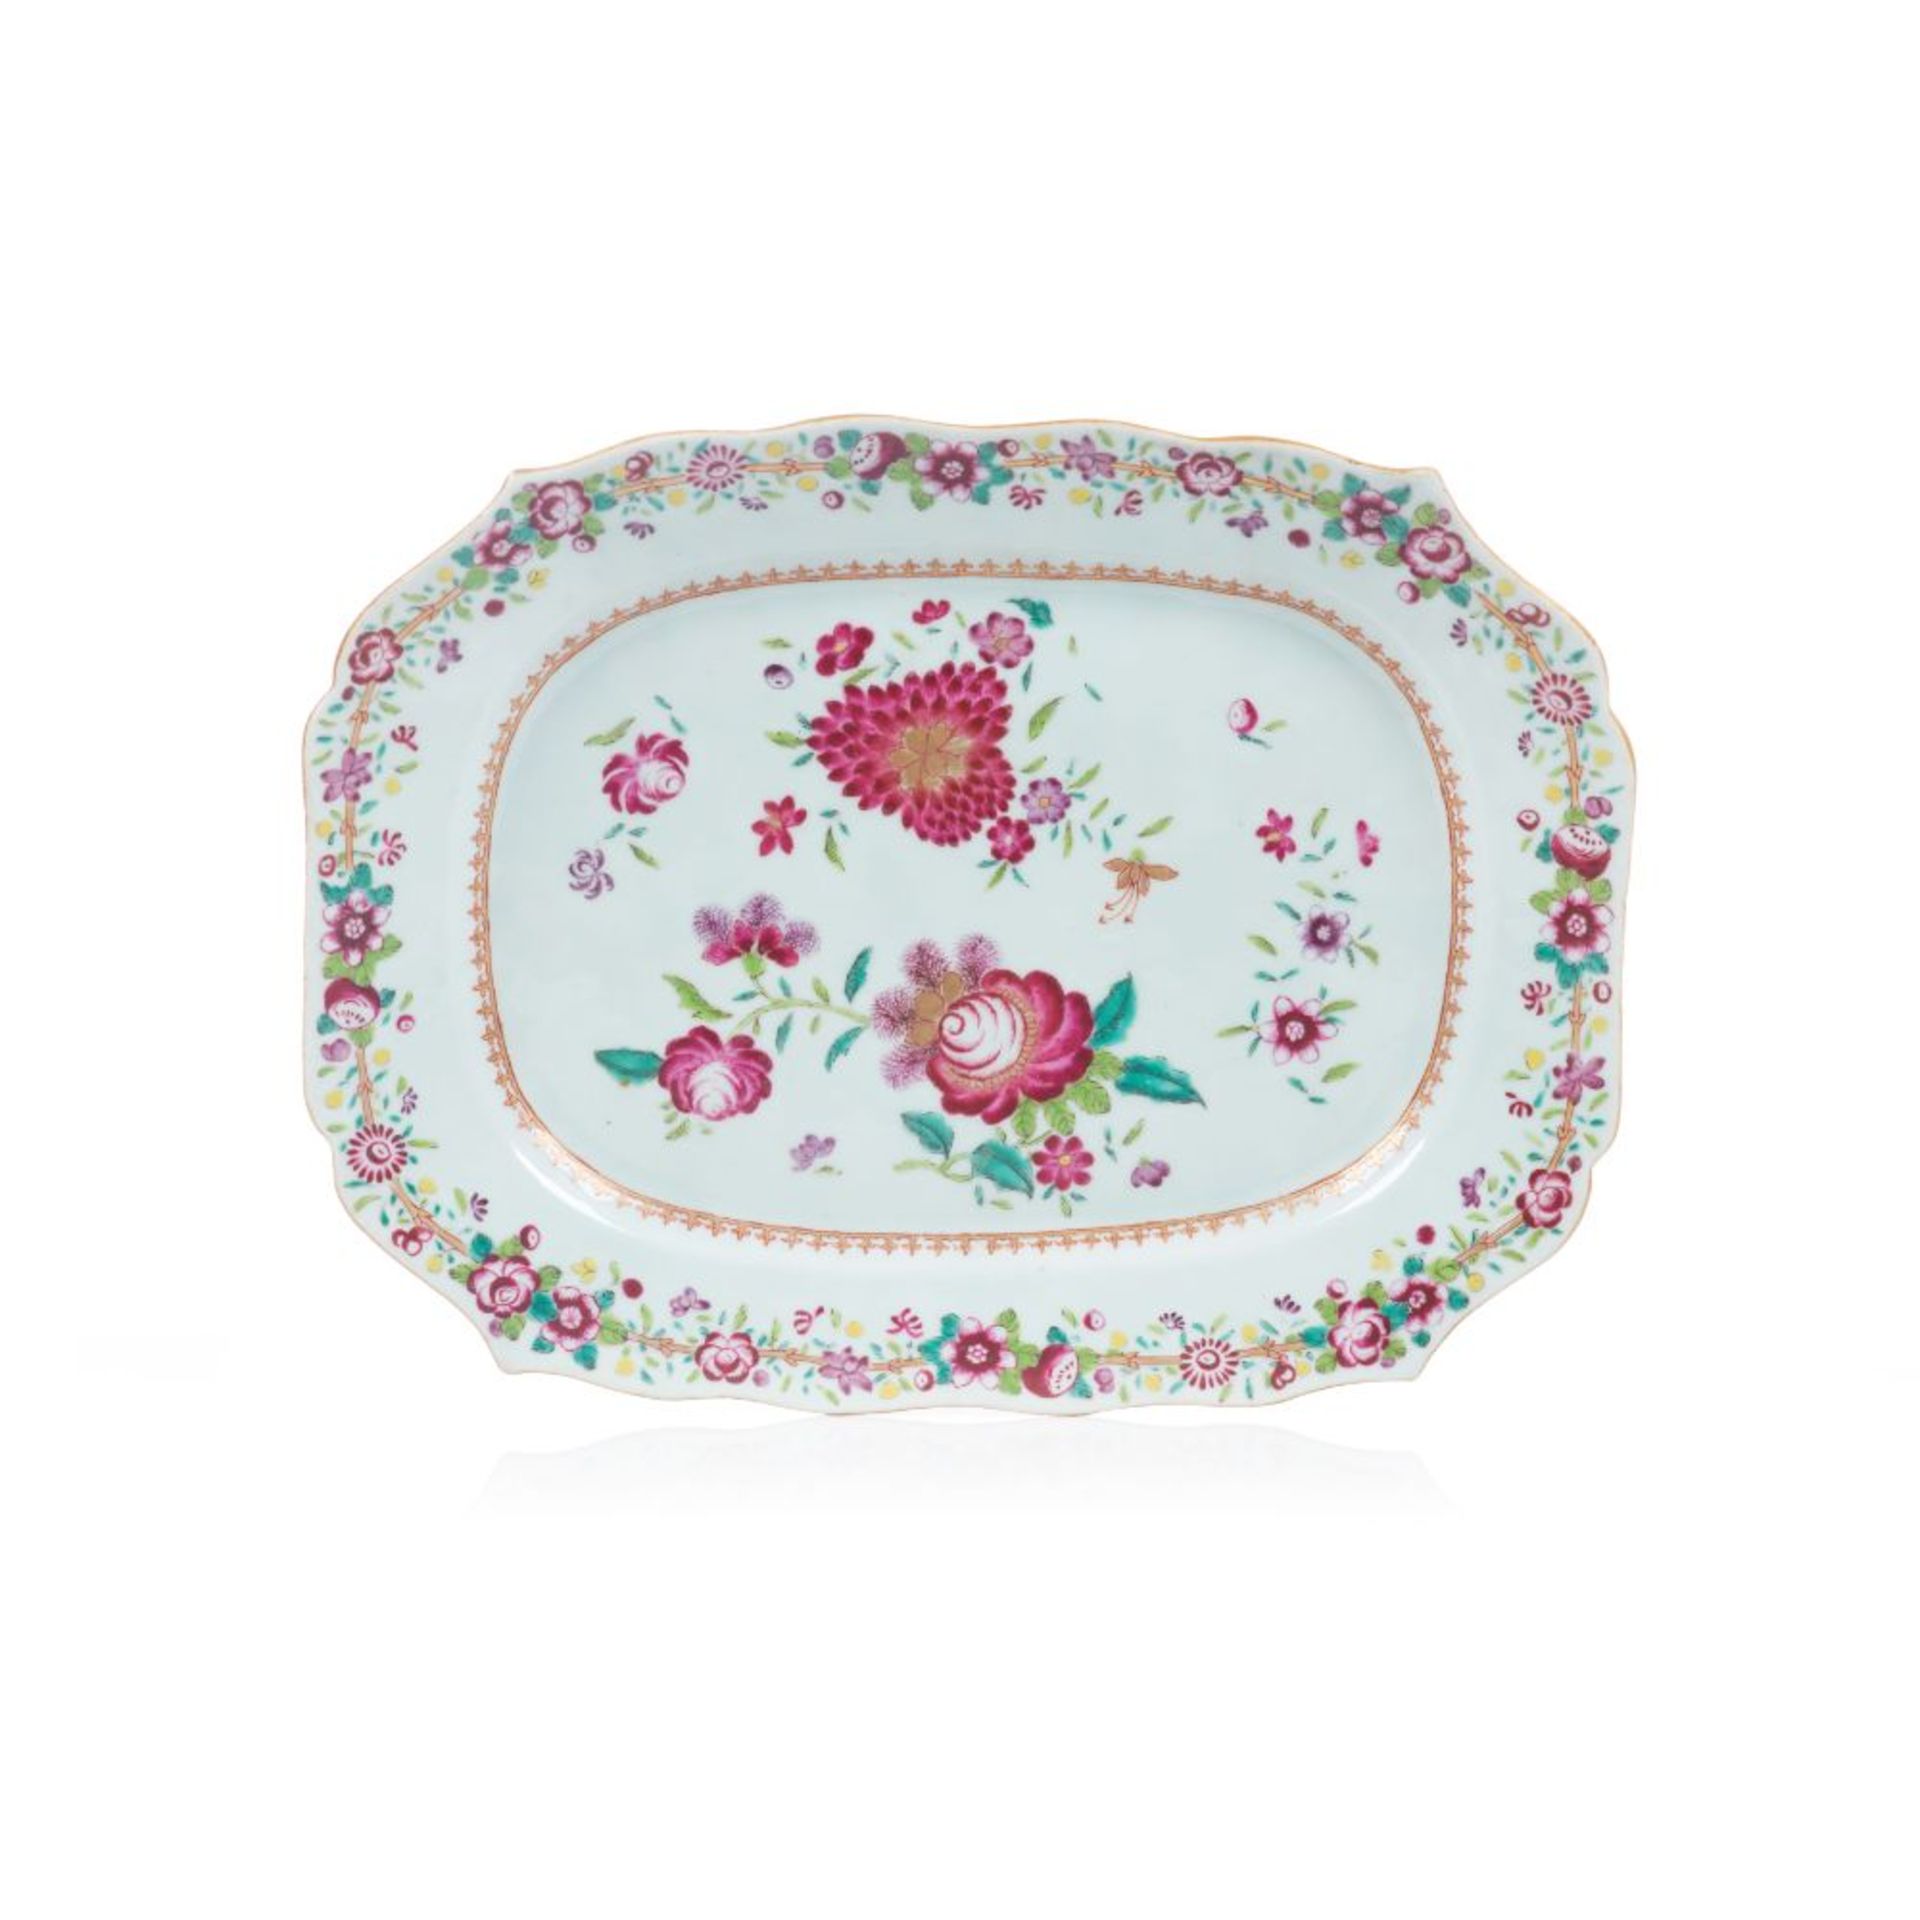 A scalloped serving platter, Chinese export porcelain, Polychrome floral decoration, Qianlong